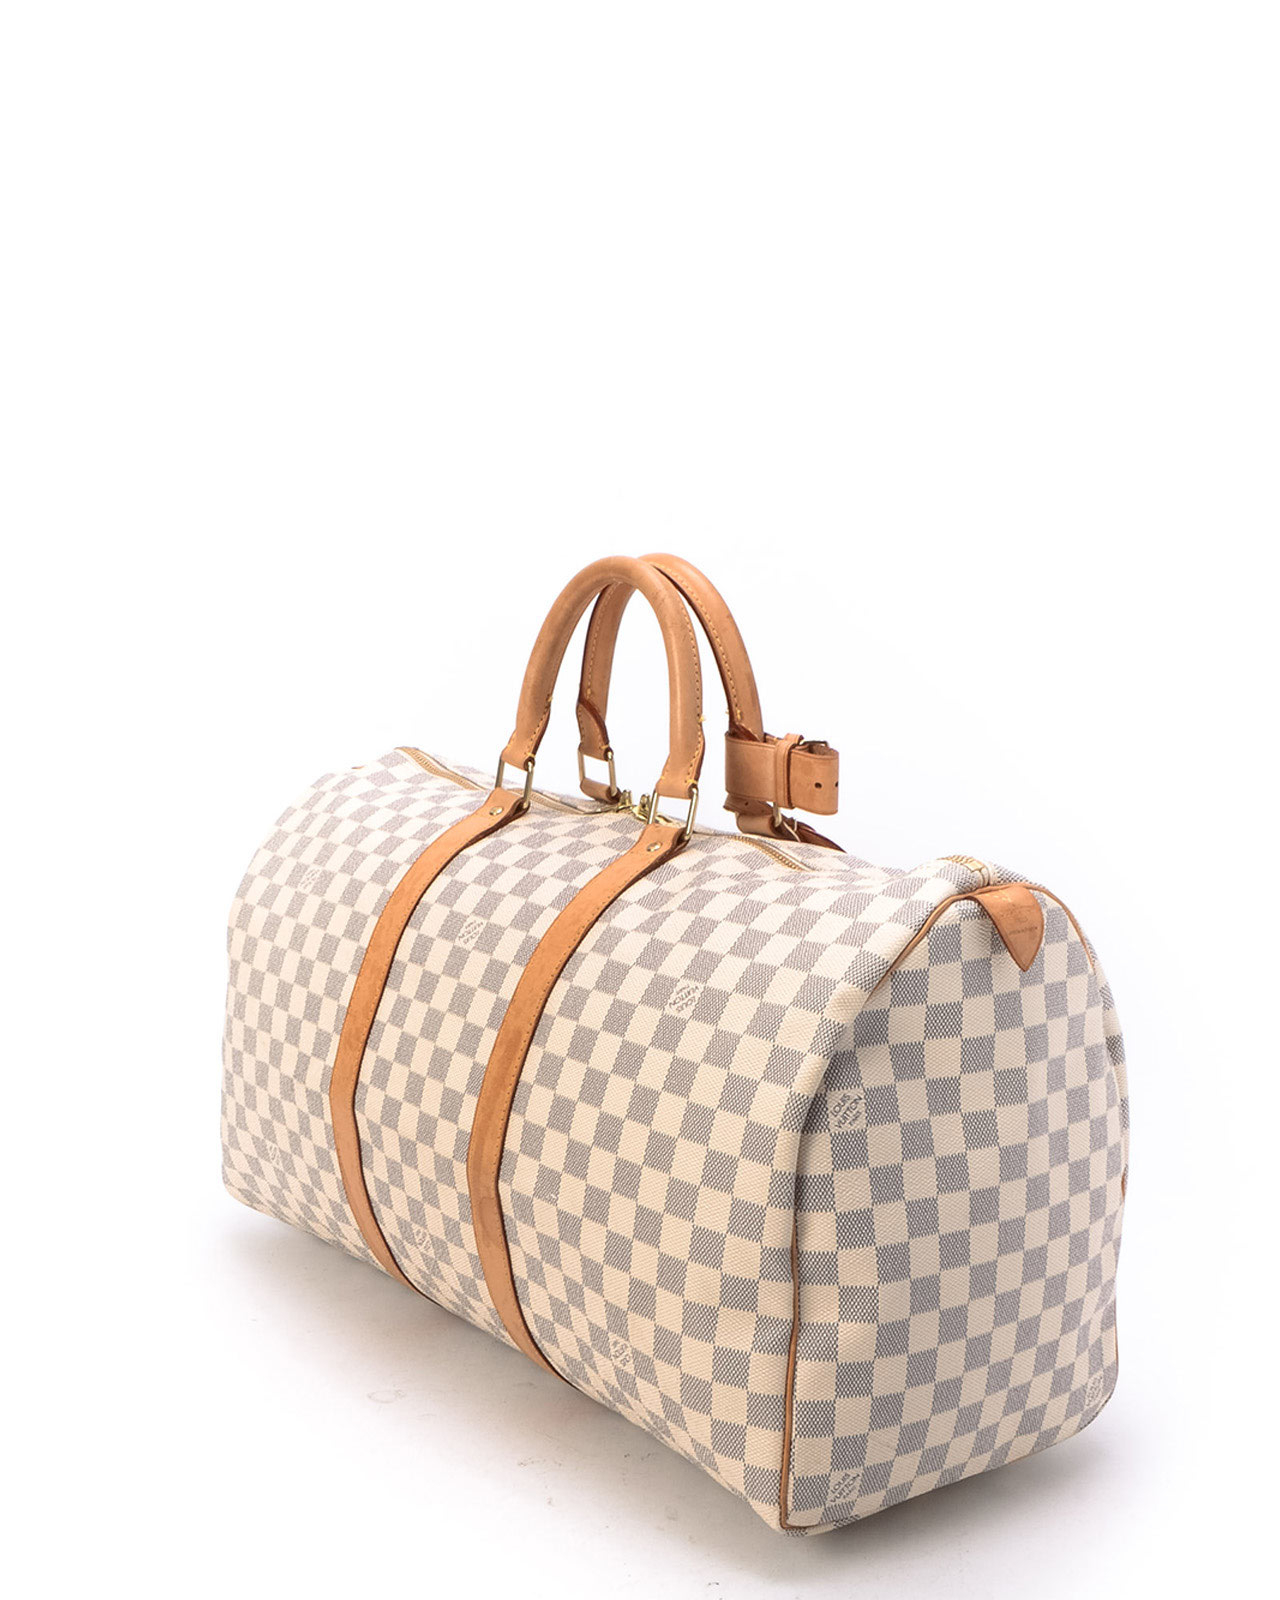 Lyst - Louis Vuitton Damier Azur Keepall 50 Travel Bag in White